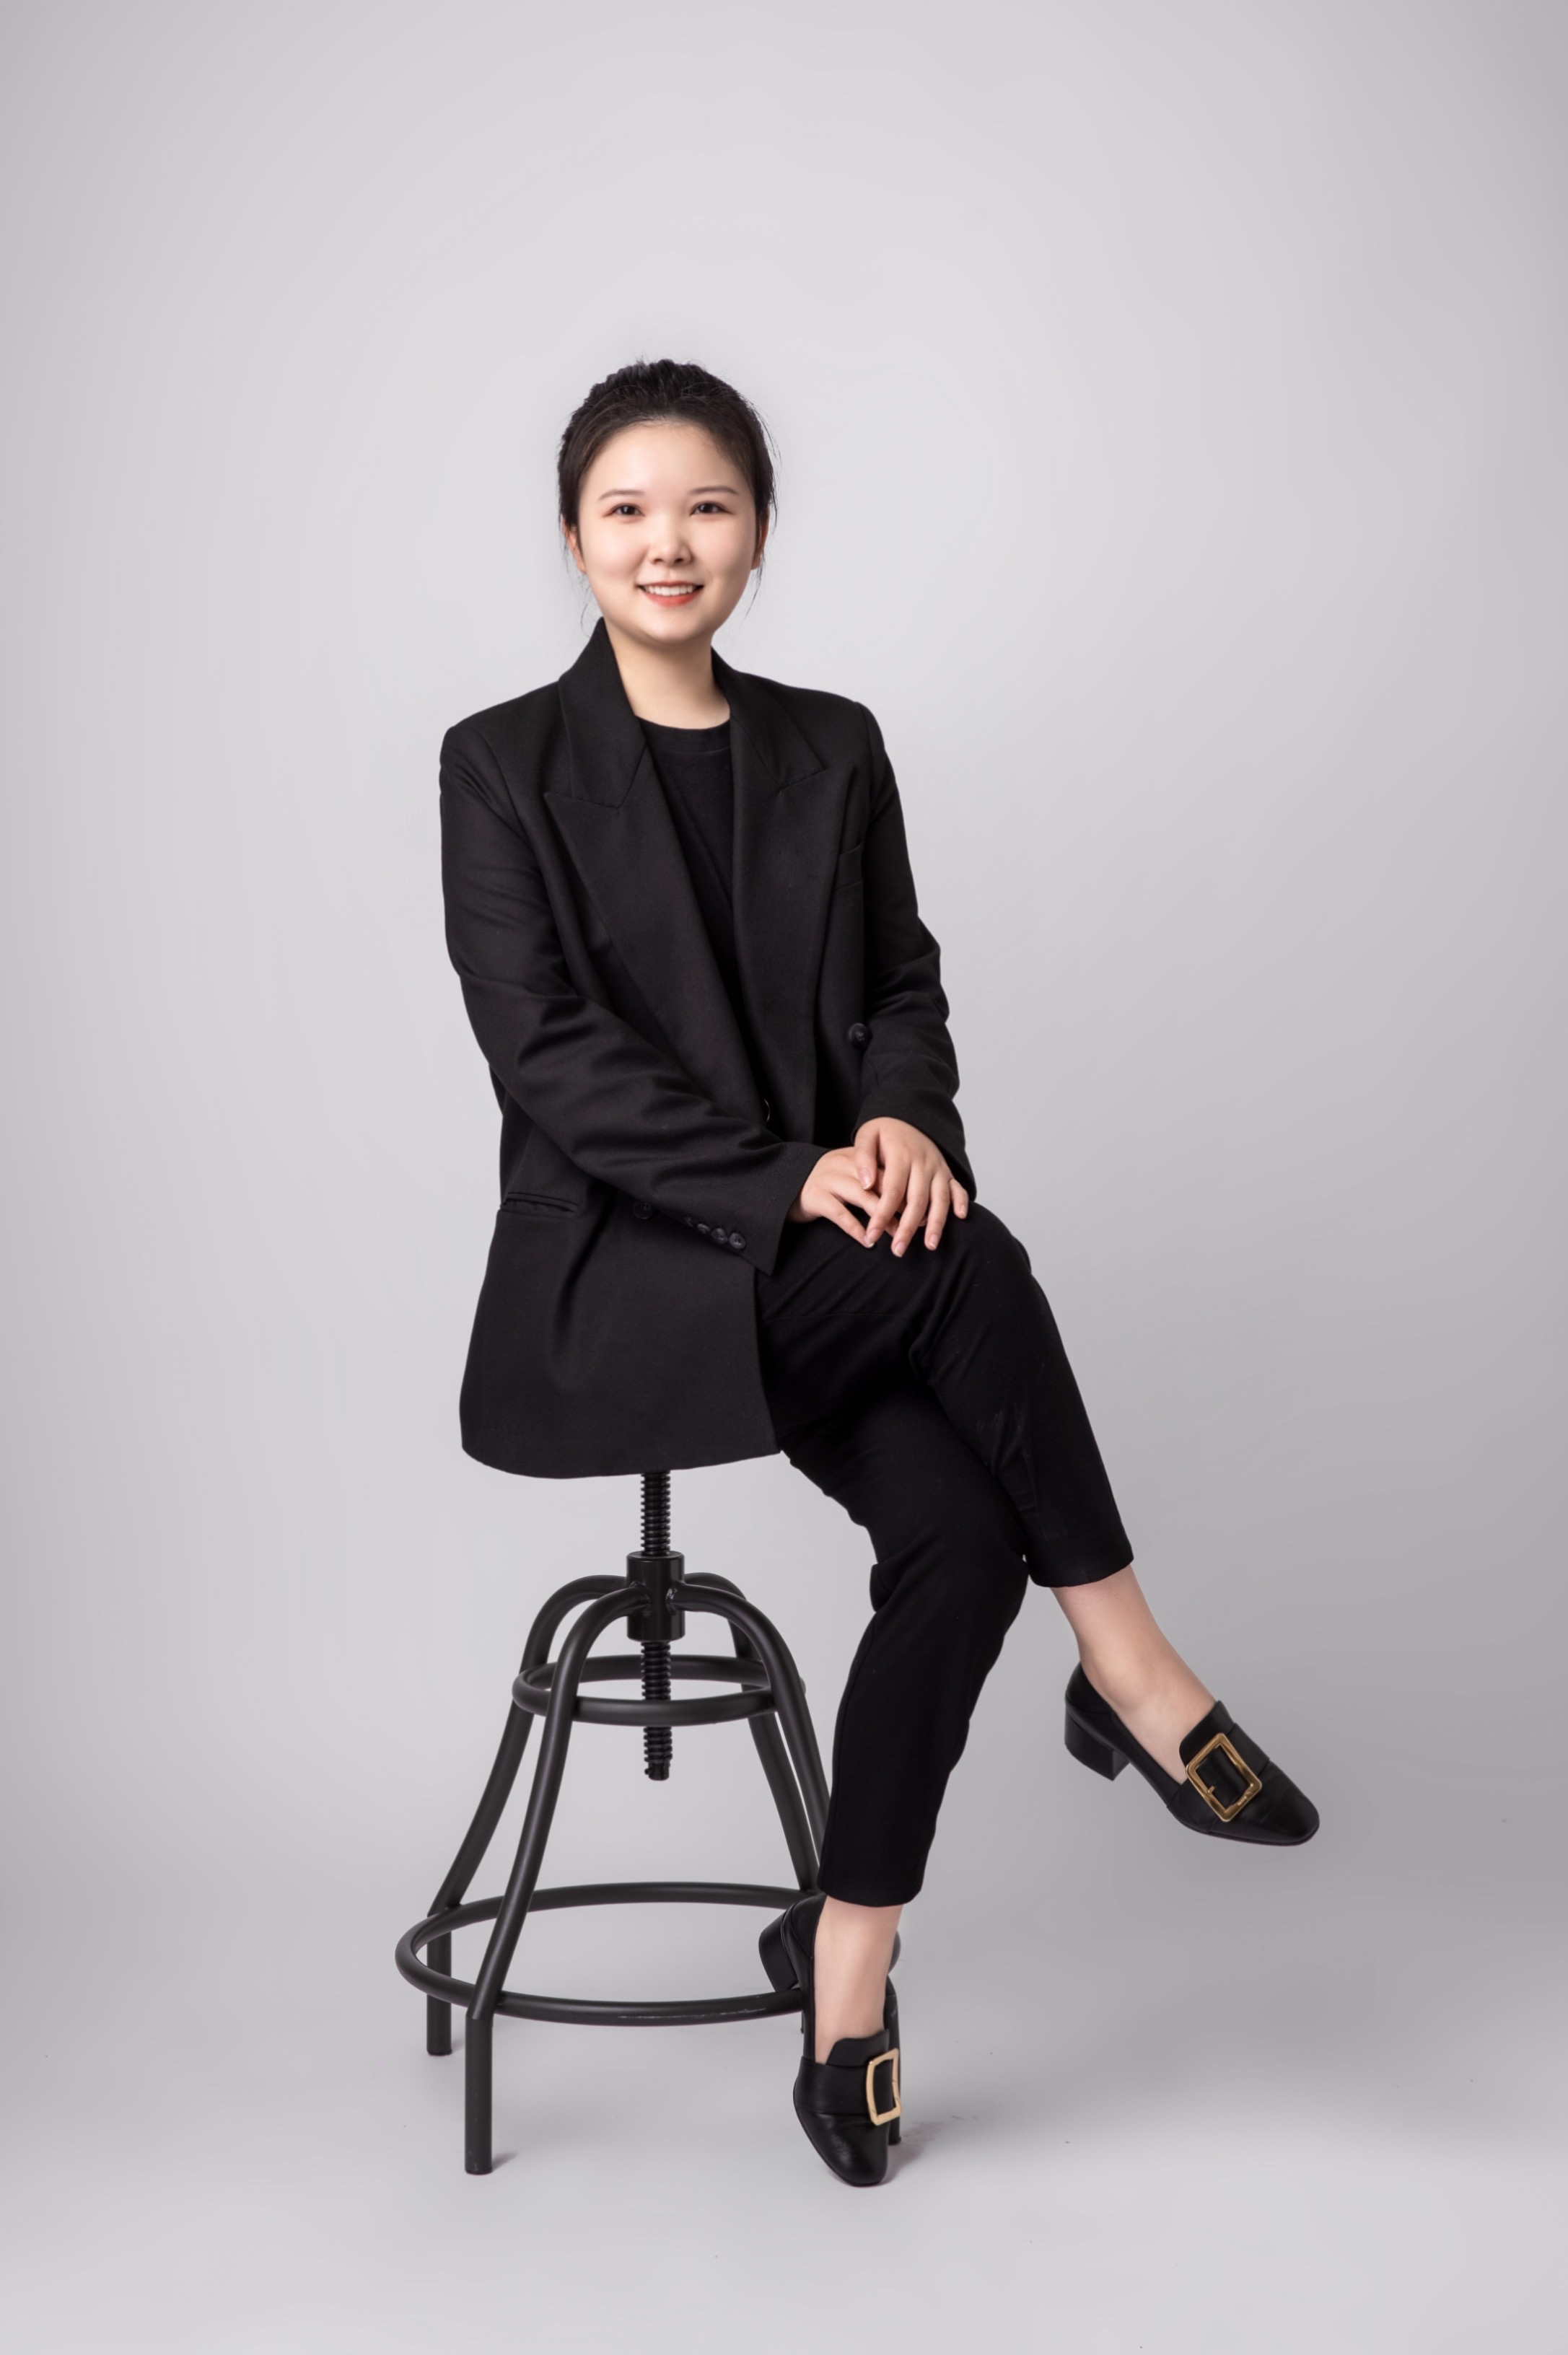 Elaine Yao Real Estate Agent